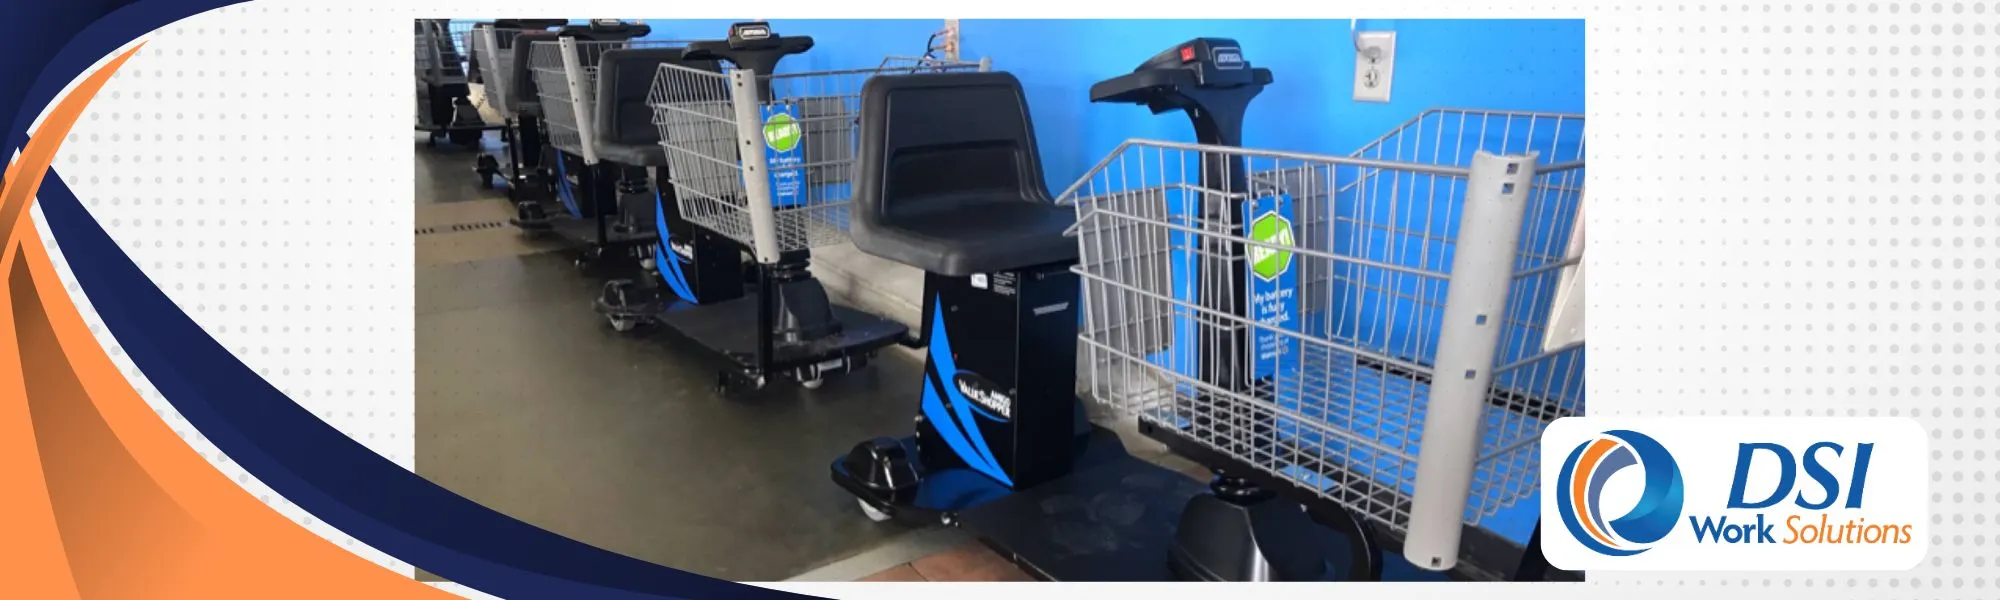 Electric Shopping Carts in Walmart